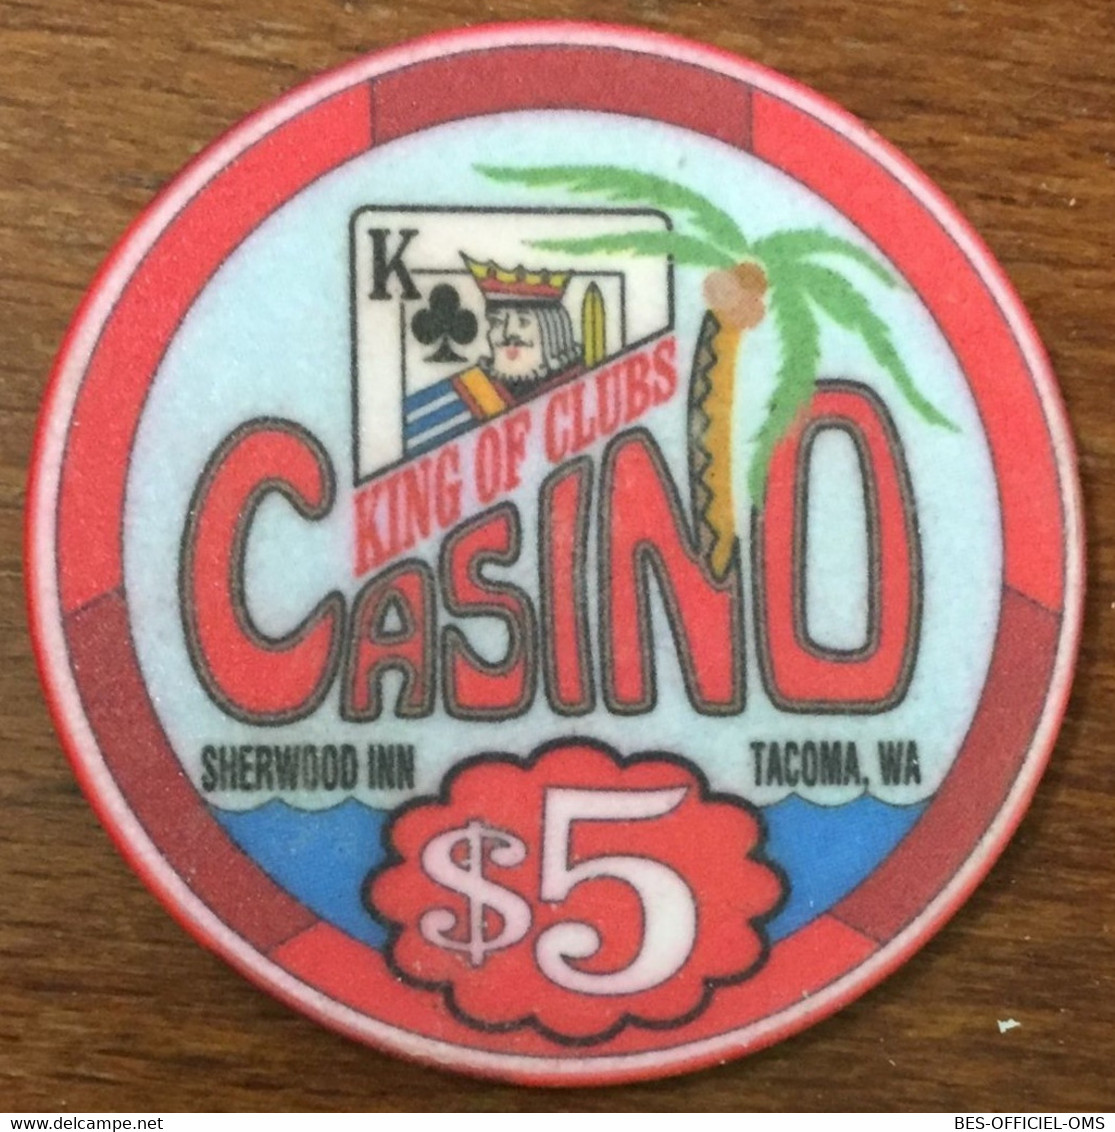 ÉTATS-UNIS USA WASHINGTON TACOMA KING OF CLUBS CASINO CHIP $5 OBSOLETE JETON TOKEN SCOINS GAMING - Casino